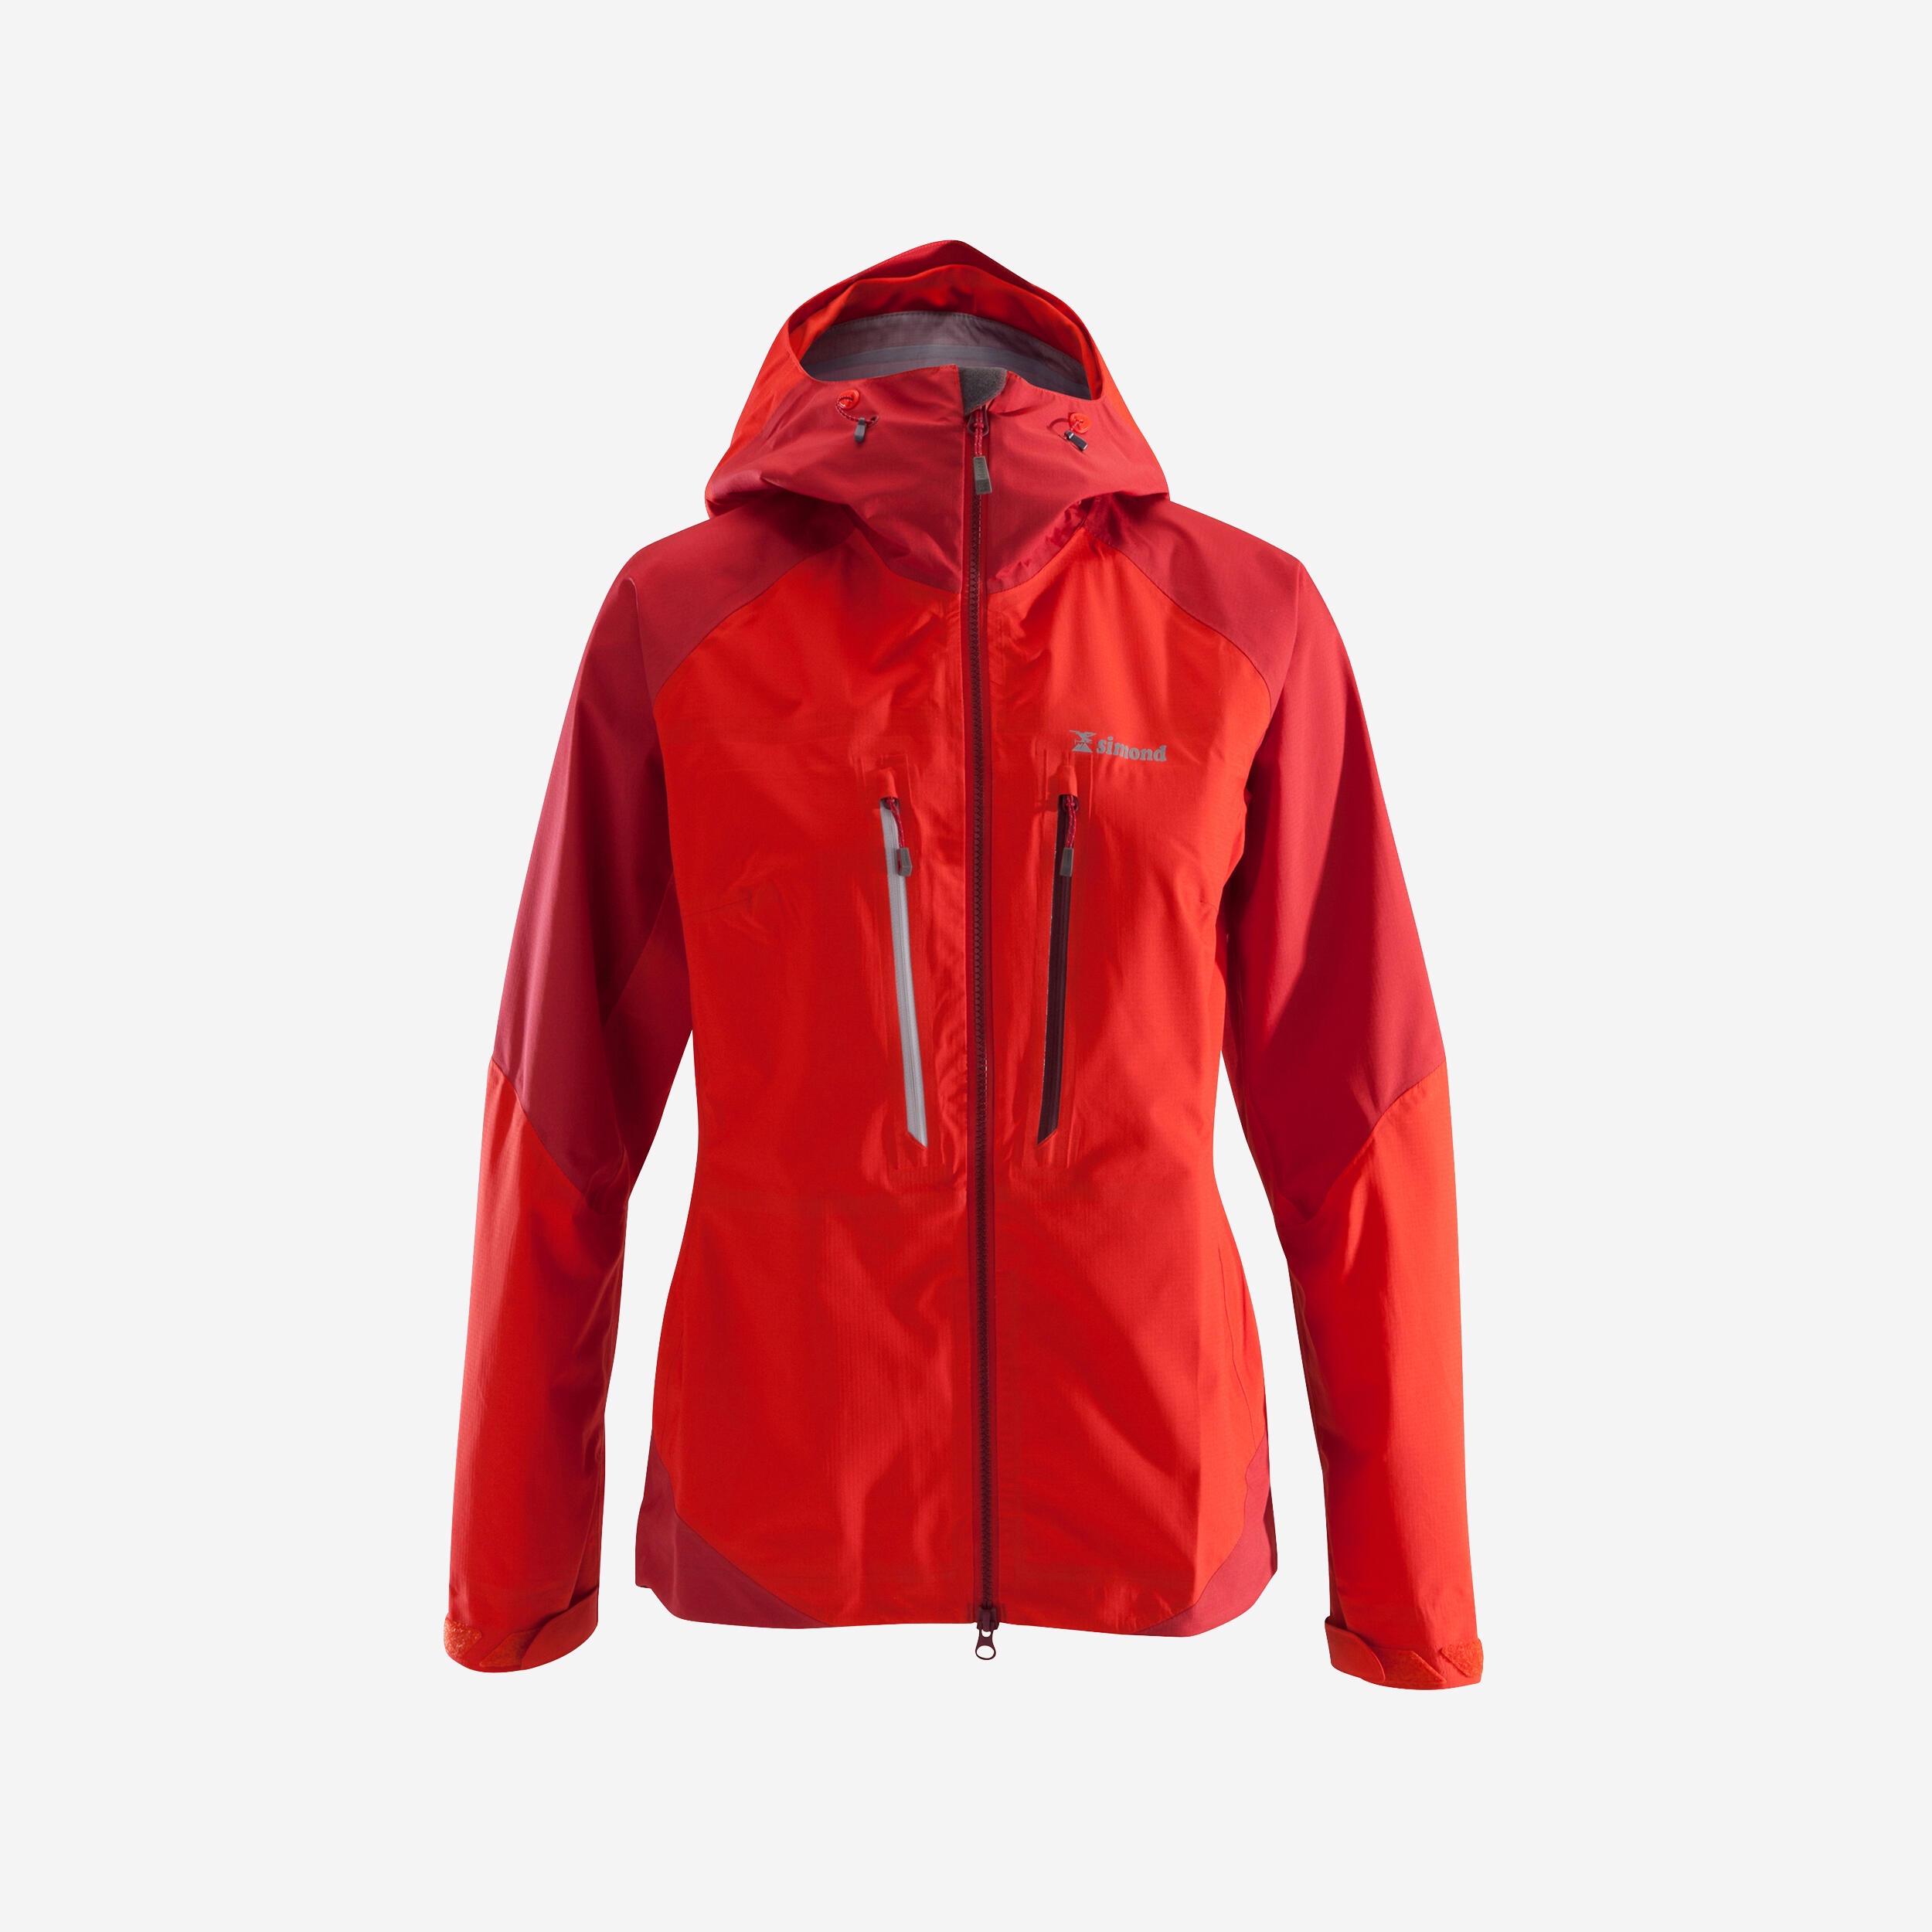 SIMOND Women's Mountaineering Waterproof Jacket - Alpinism Light Red